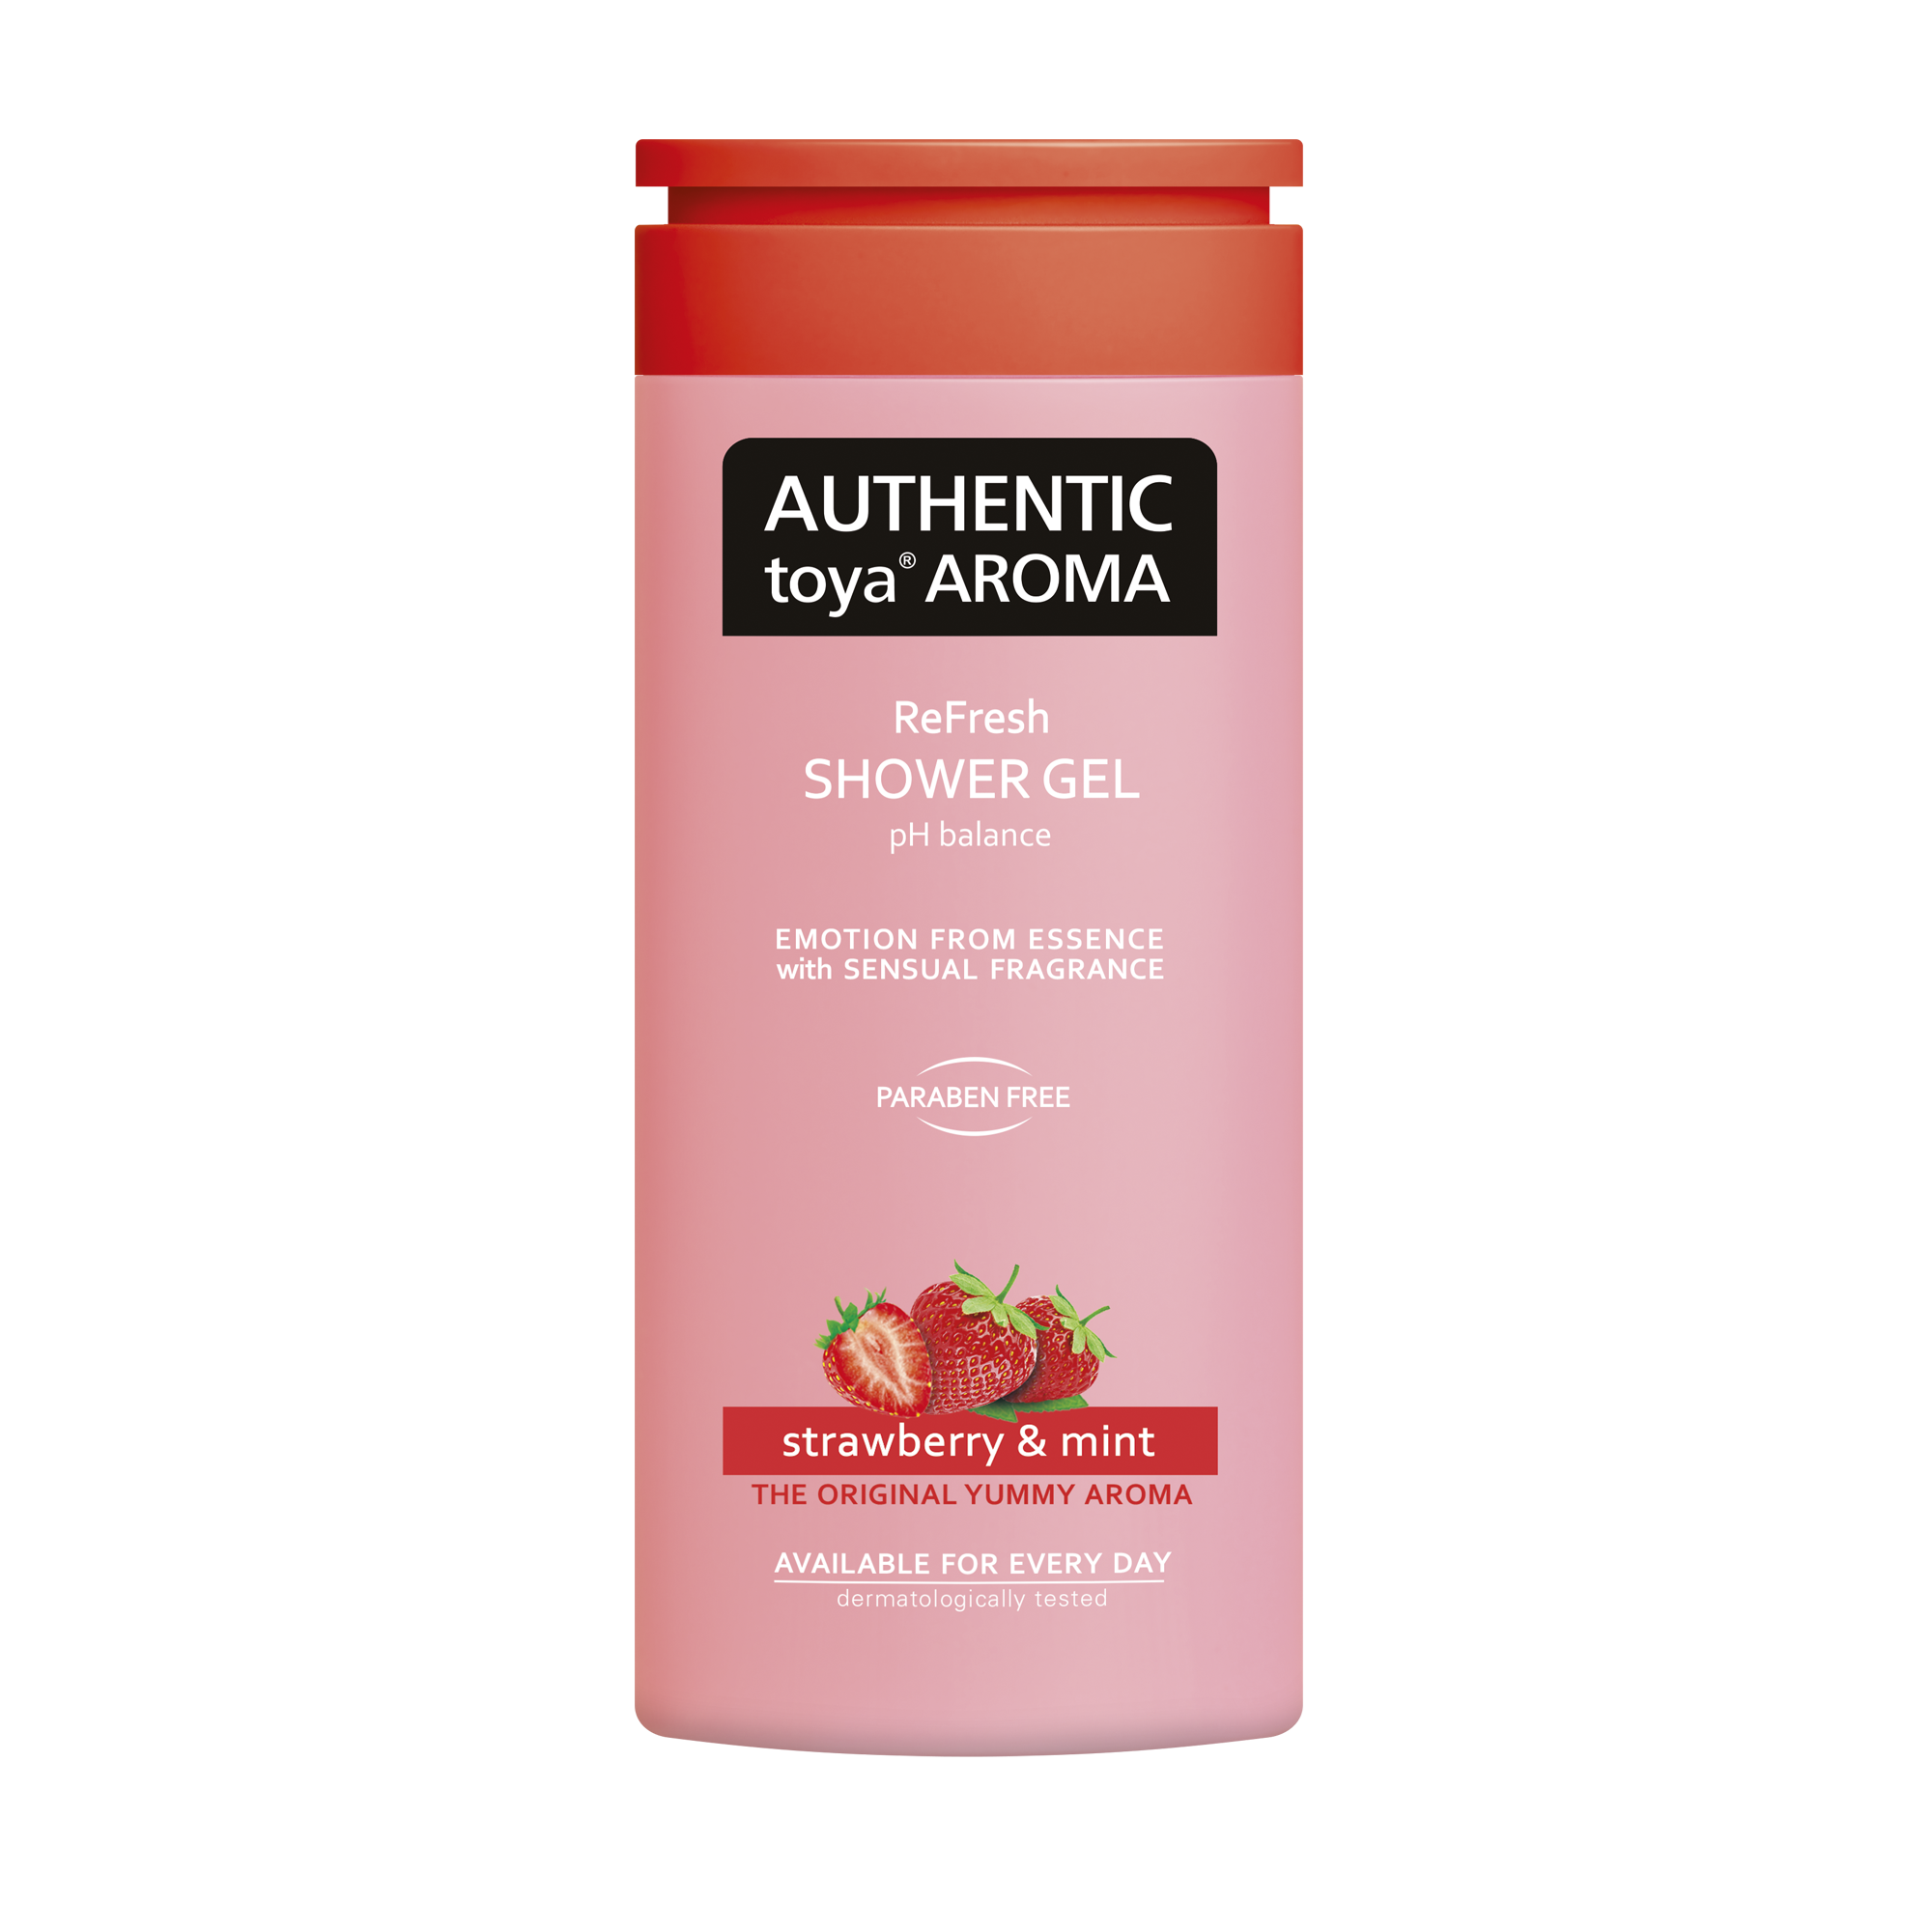 AUTHENTIC toya AROMA Duschgels strawberry & mint